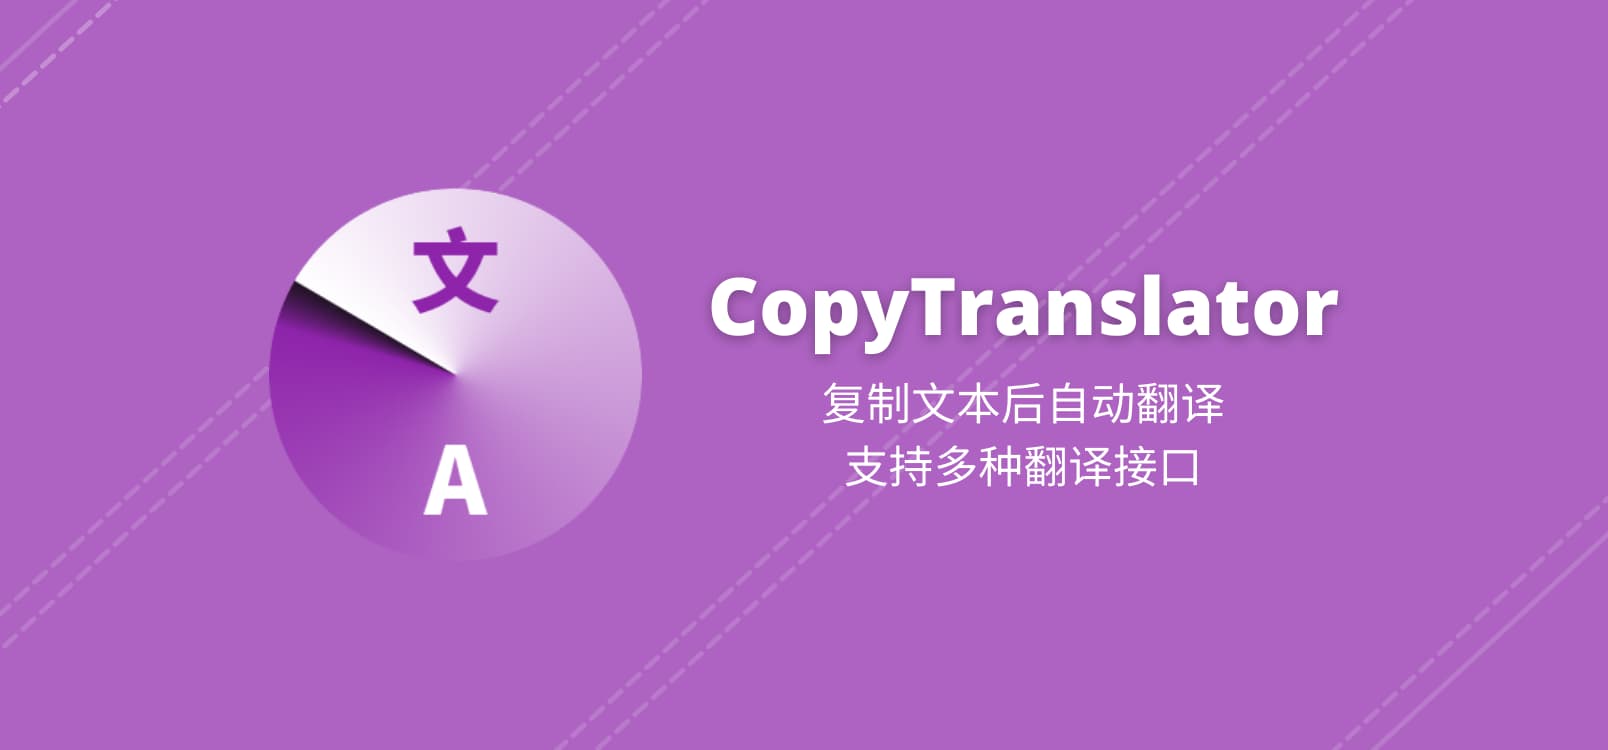 CopyTranslator - 复制文本后自动翻译，支持多种翻译接口